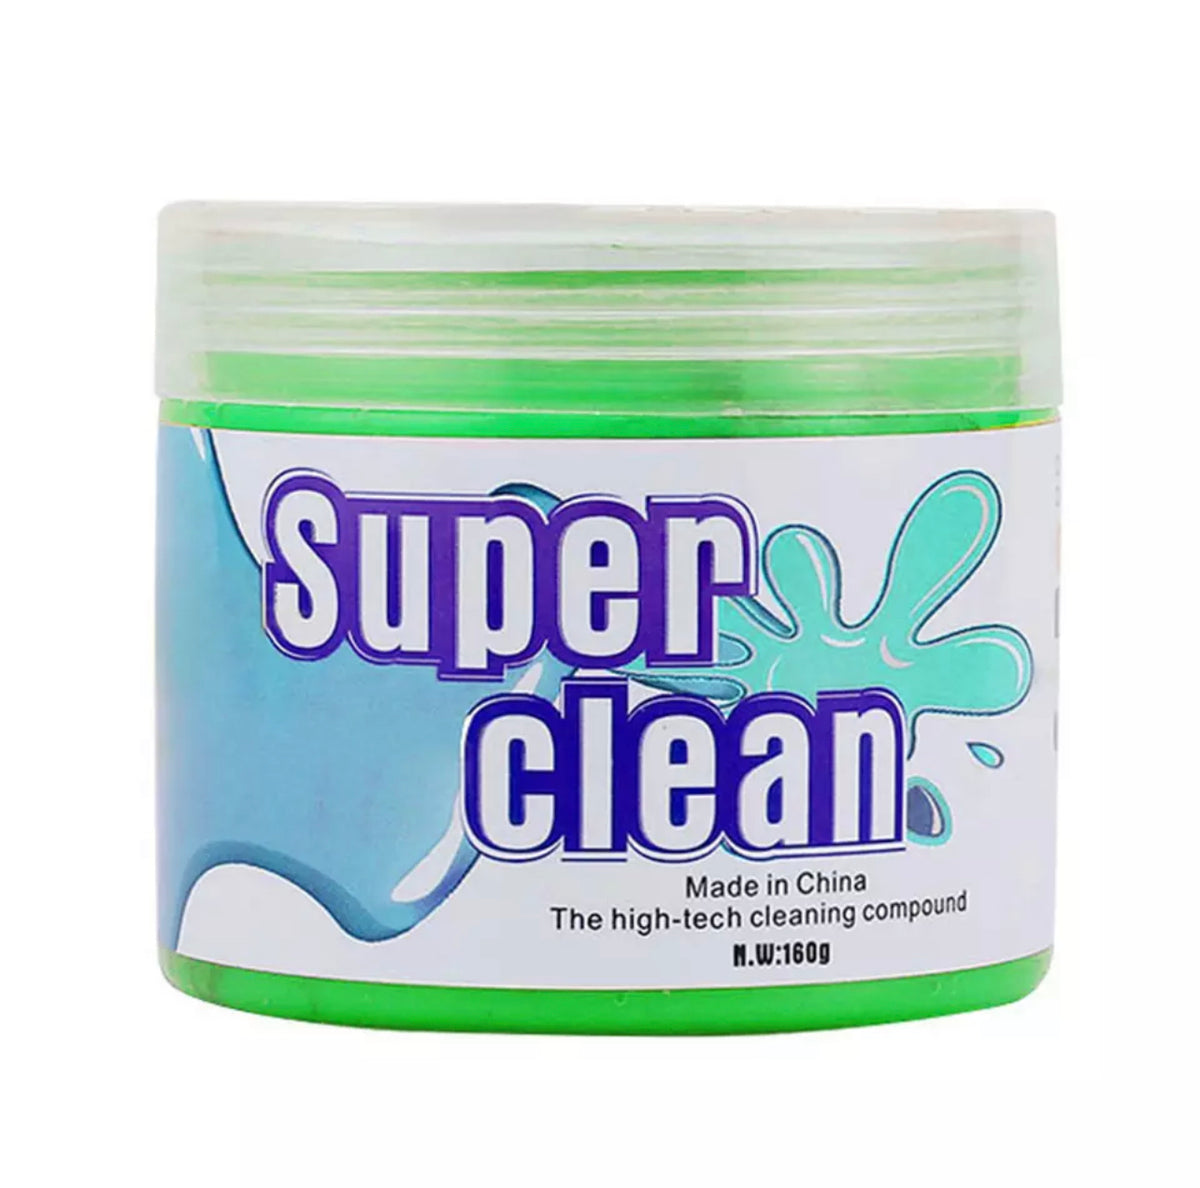 Cleaning Gel 4 Pack Natural Biodegradable Fresh Fragrance